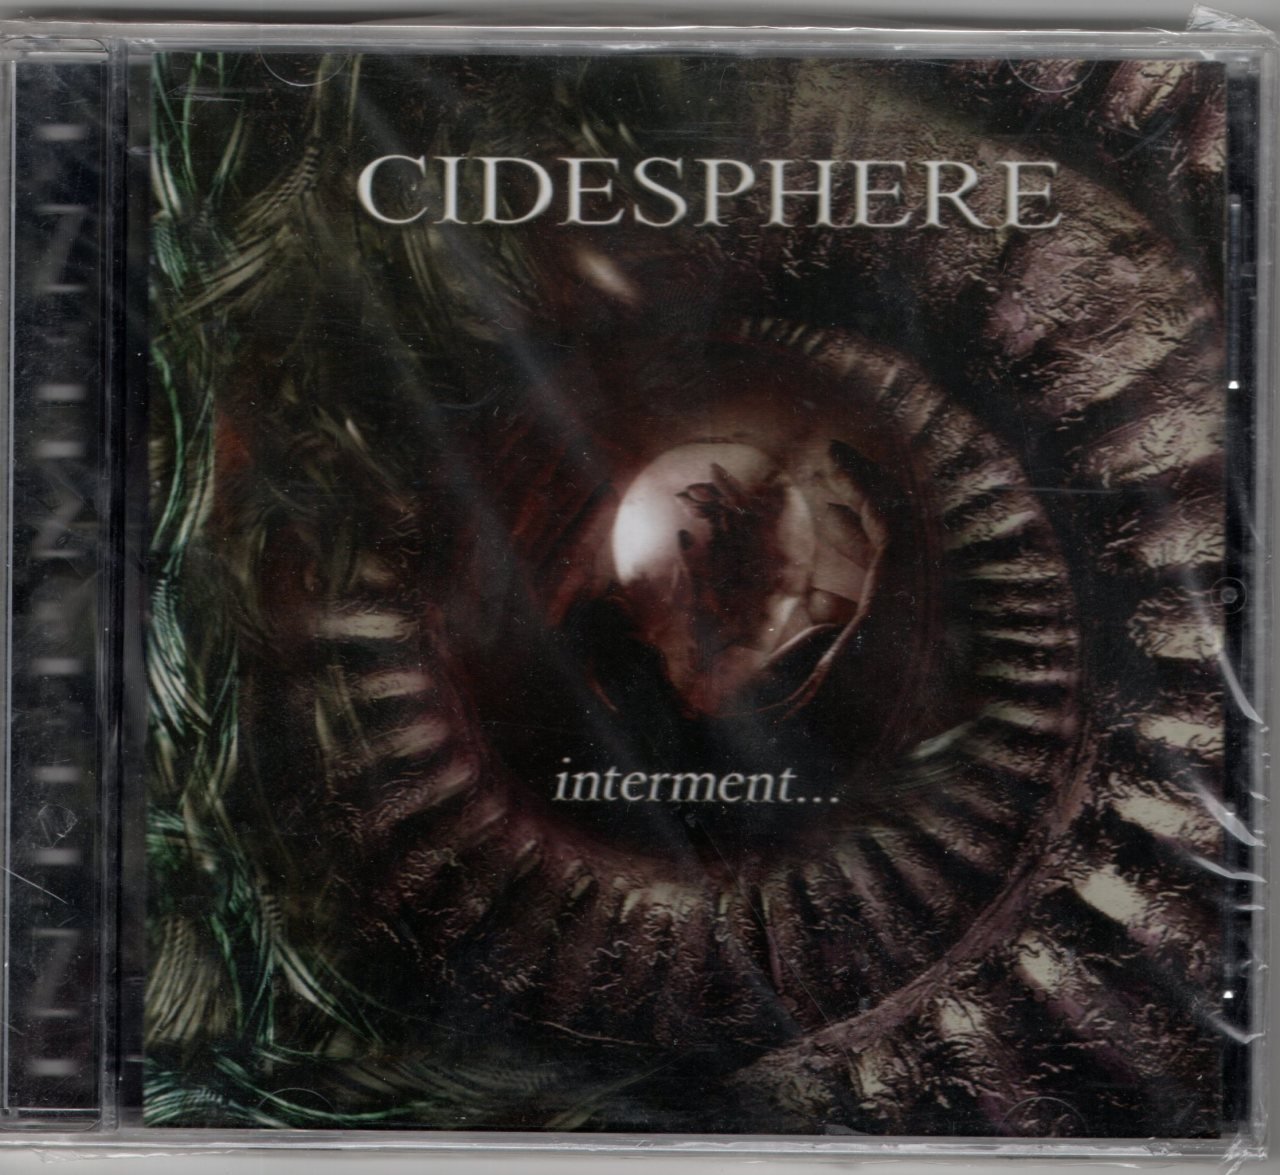 CIDESPHERE - INTERMENT... (2002) - CD SIFIR HAMMER MÜZİK DEATH METAL